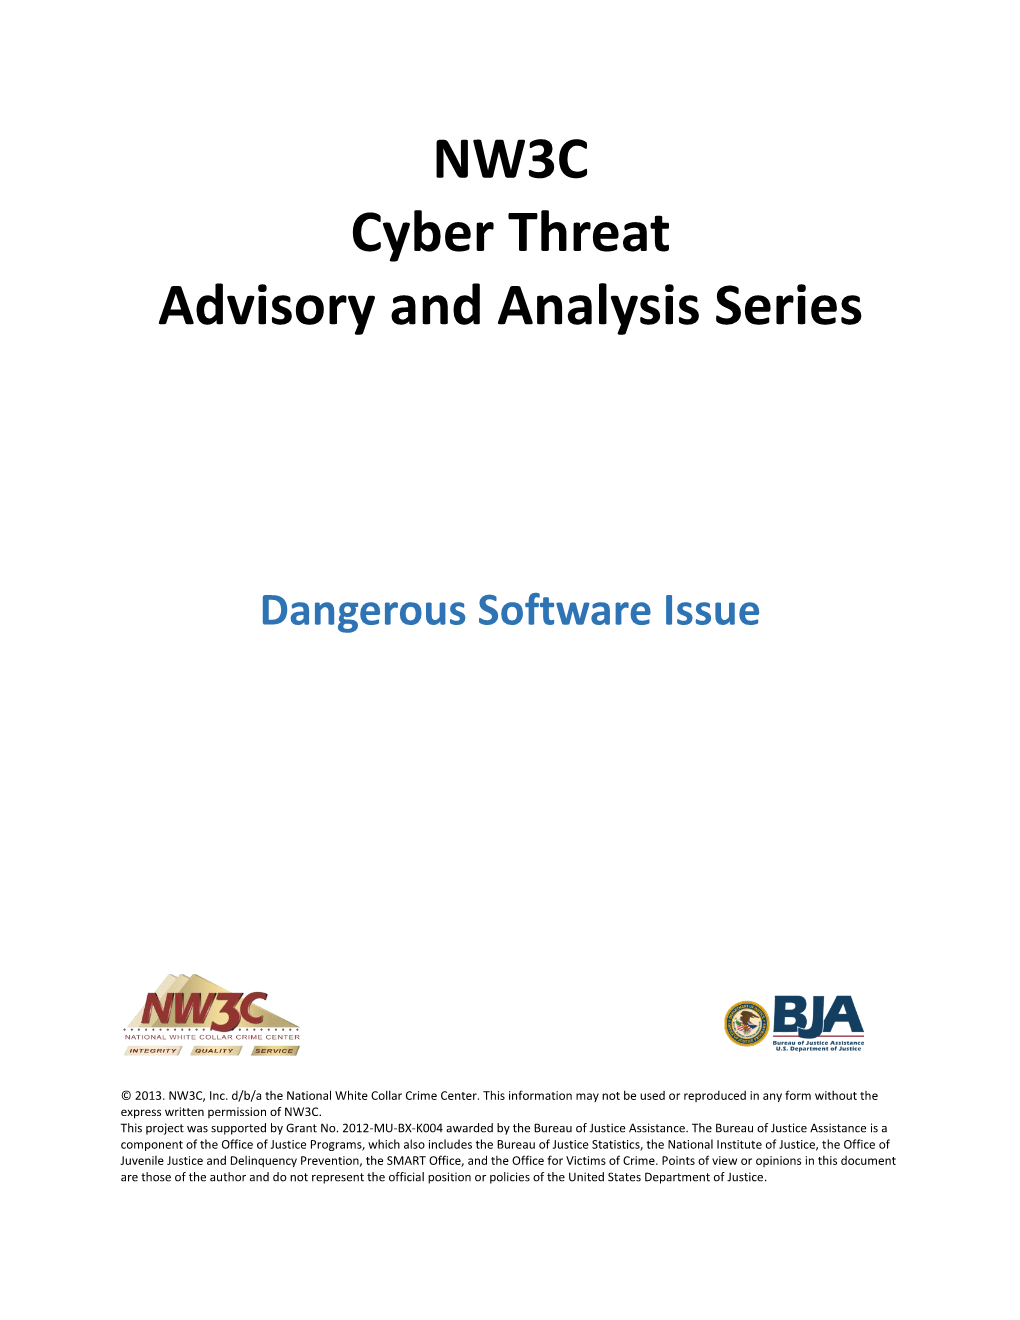 NW3C Cyber Threat Advisory and Analysis Series